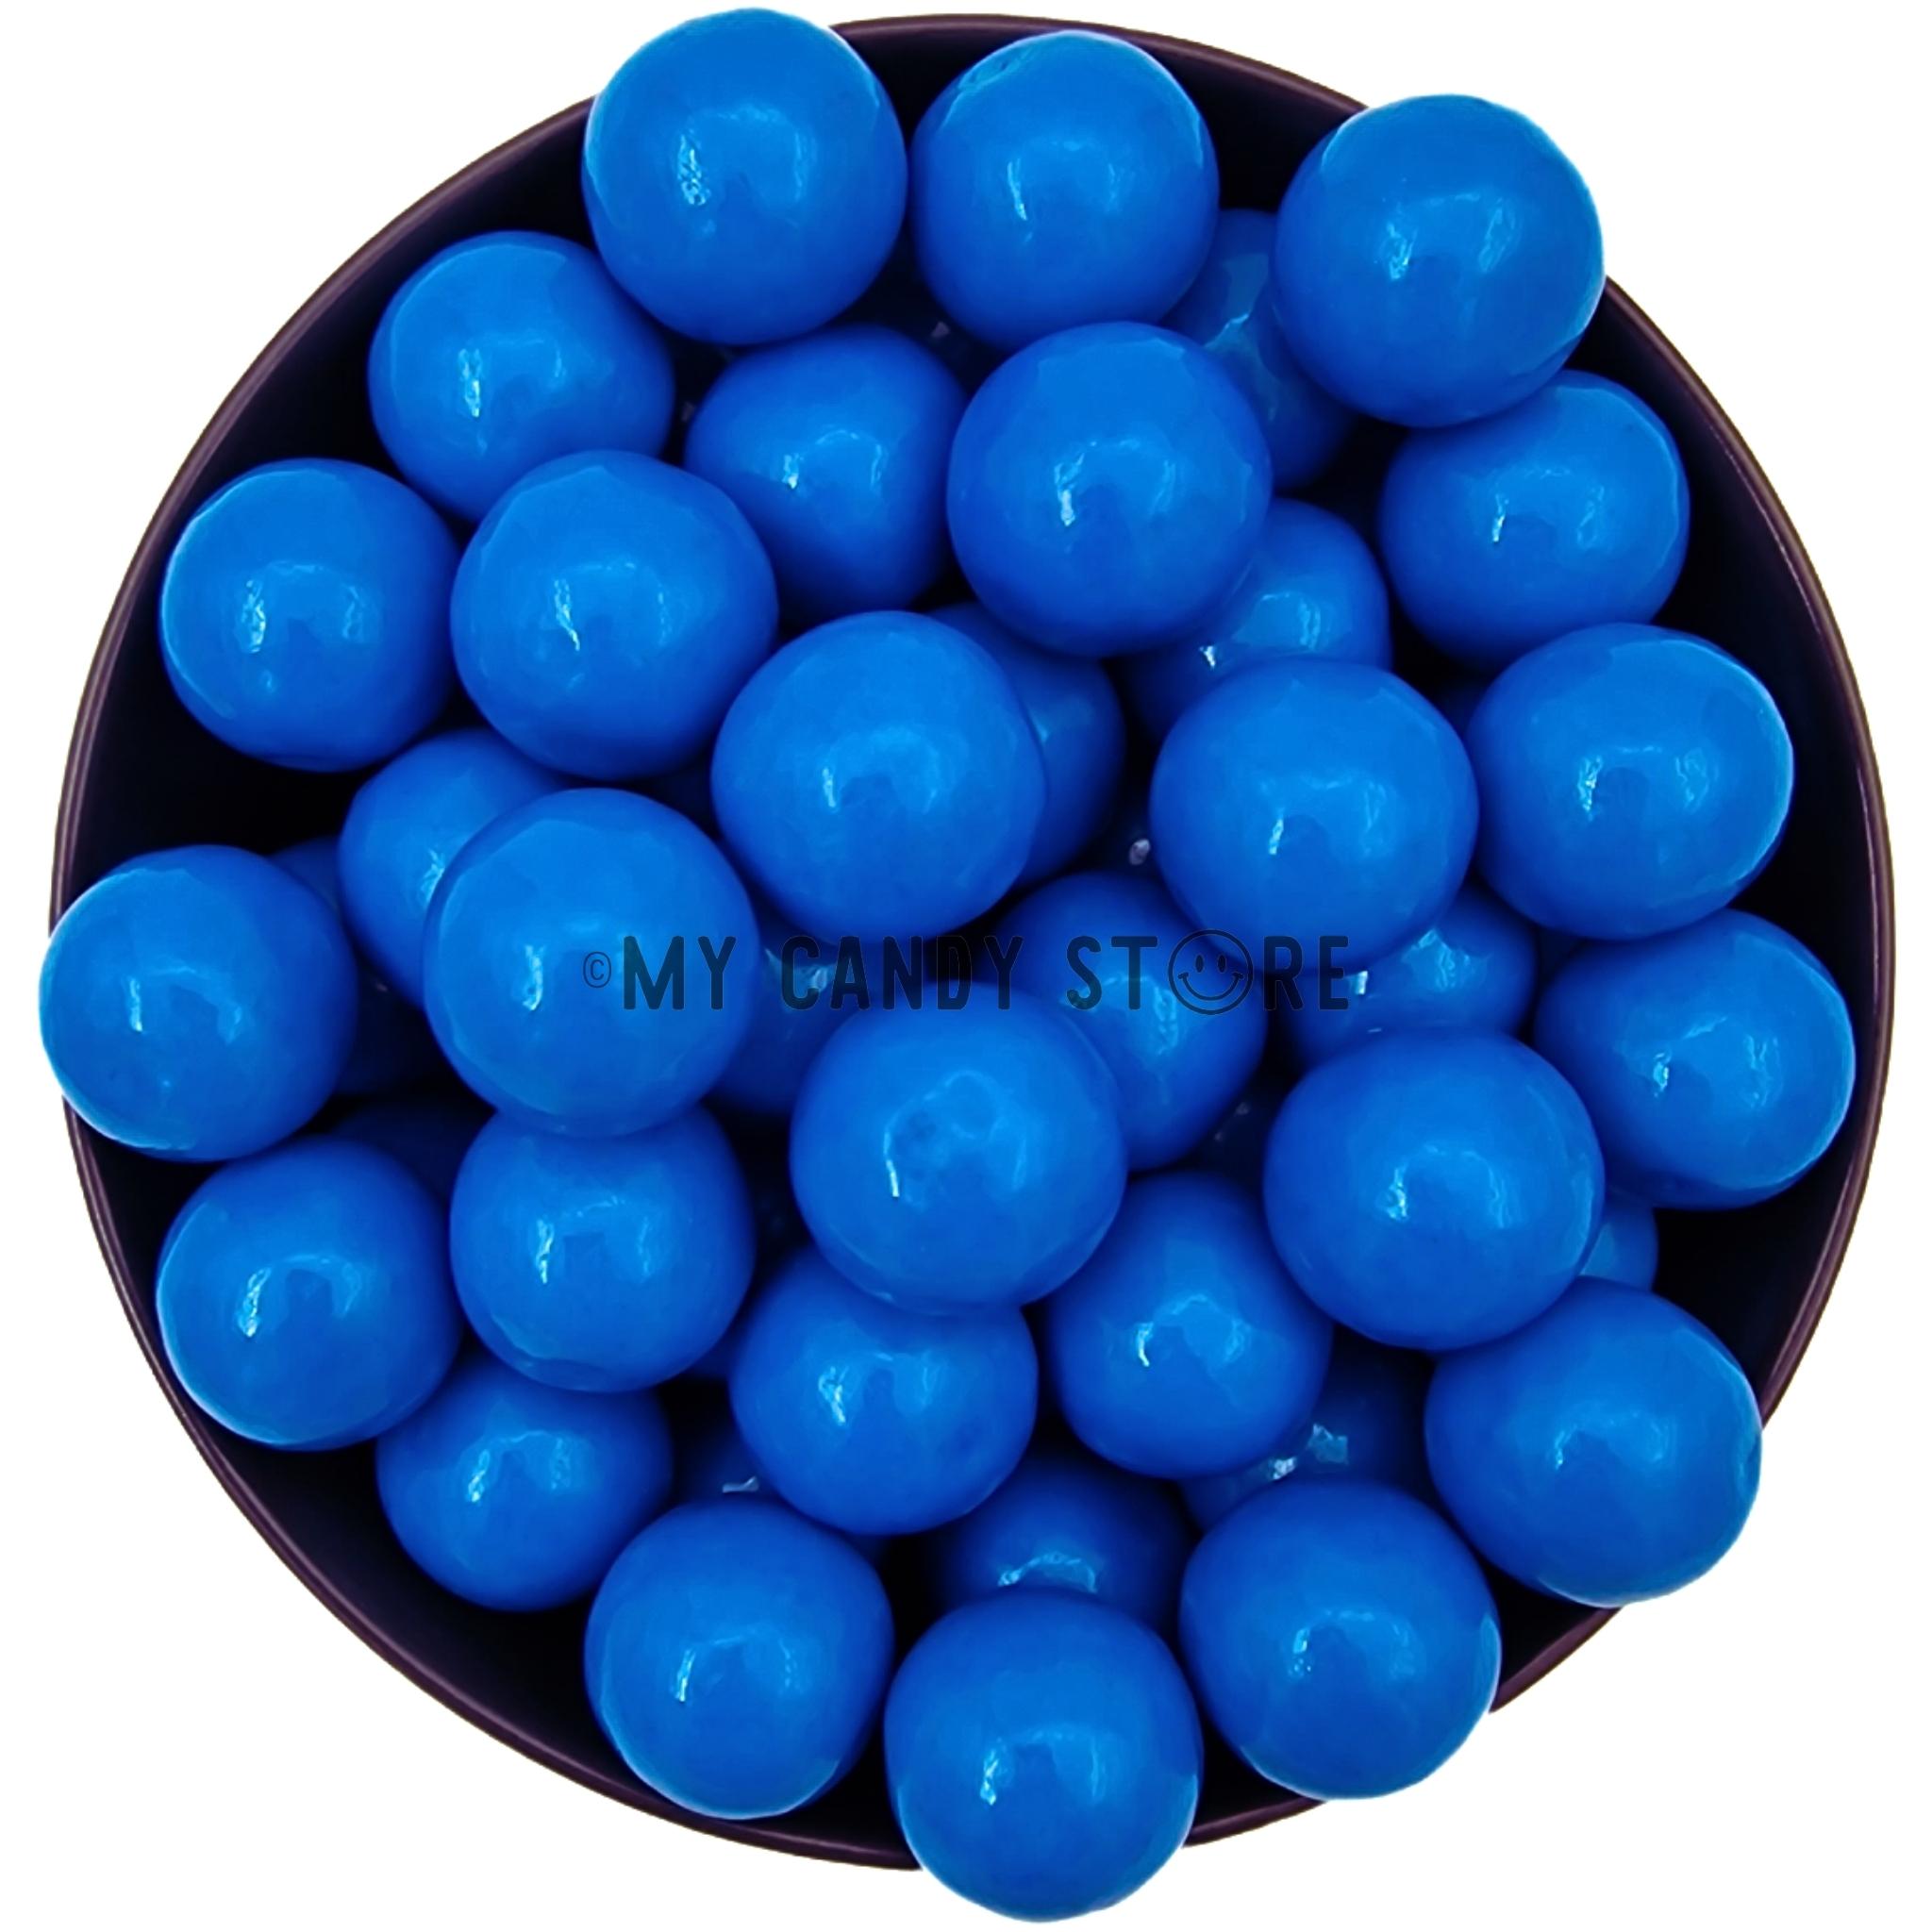 Blueberry Bubblegum Balls